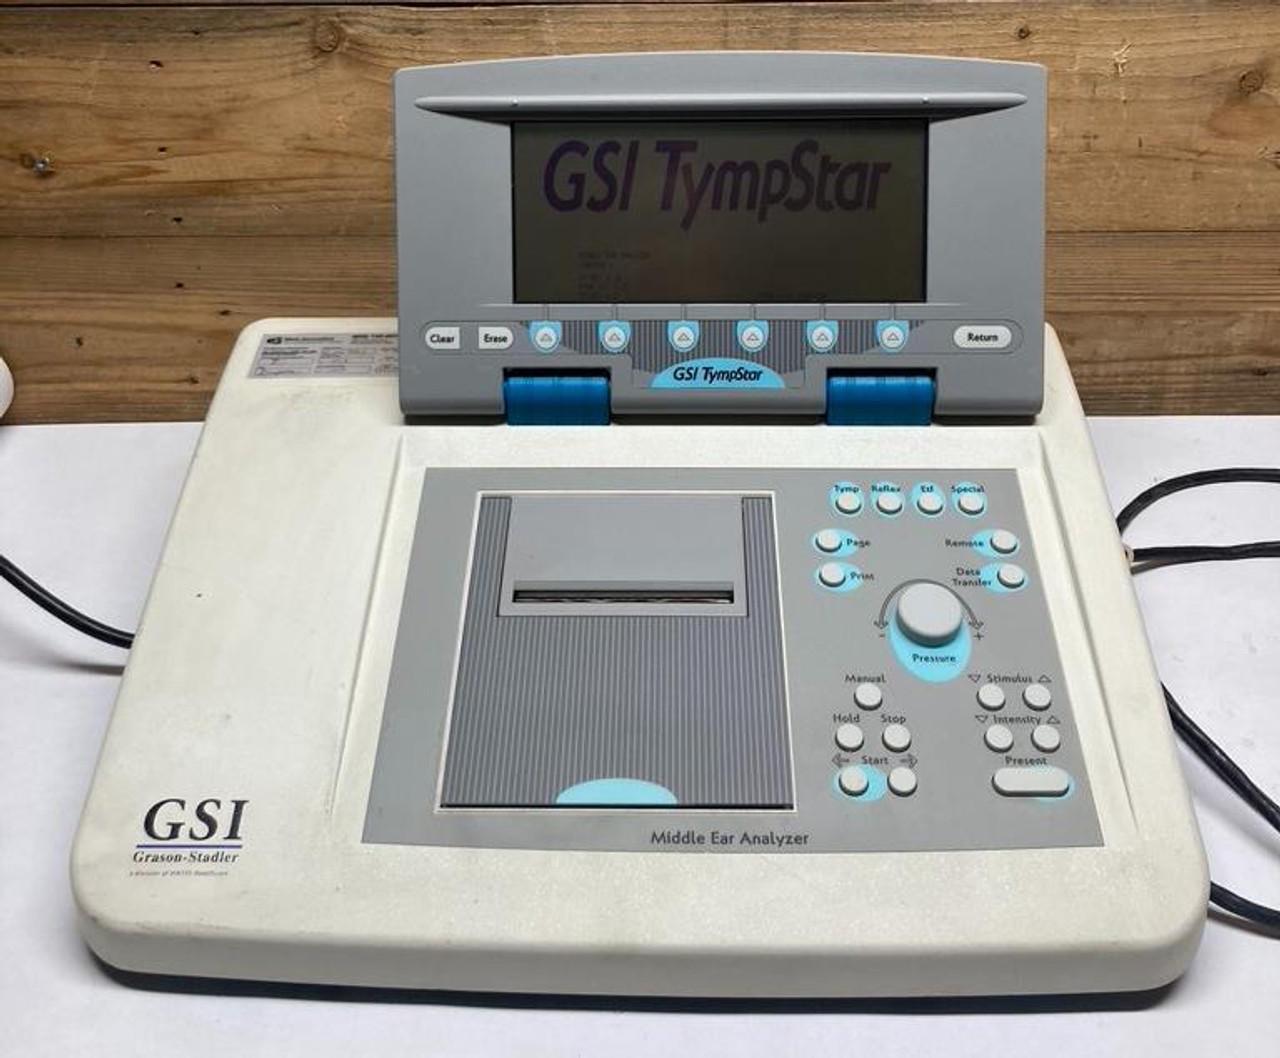 GSI Tympstar Middle Ear Analyzer 2000-97xx Grason-Stadler